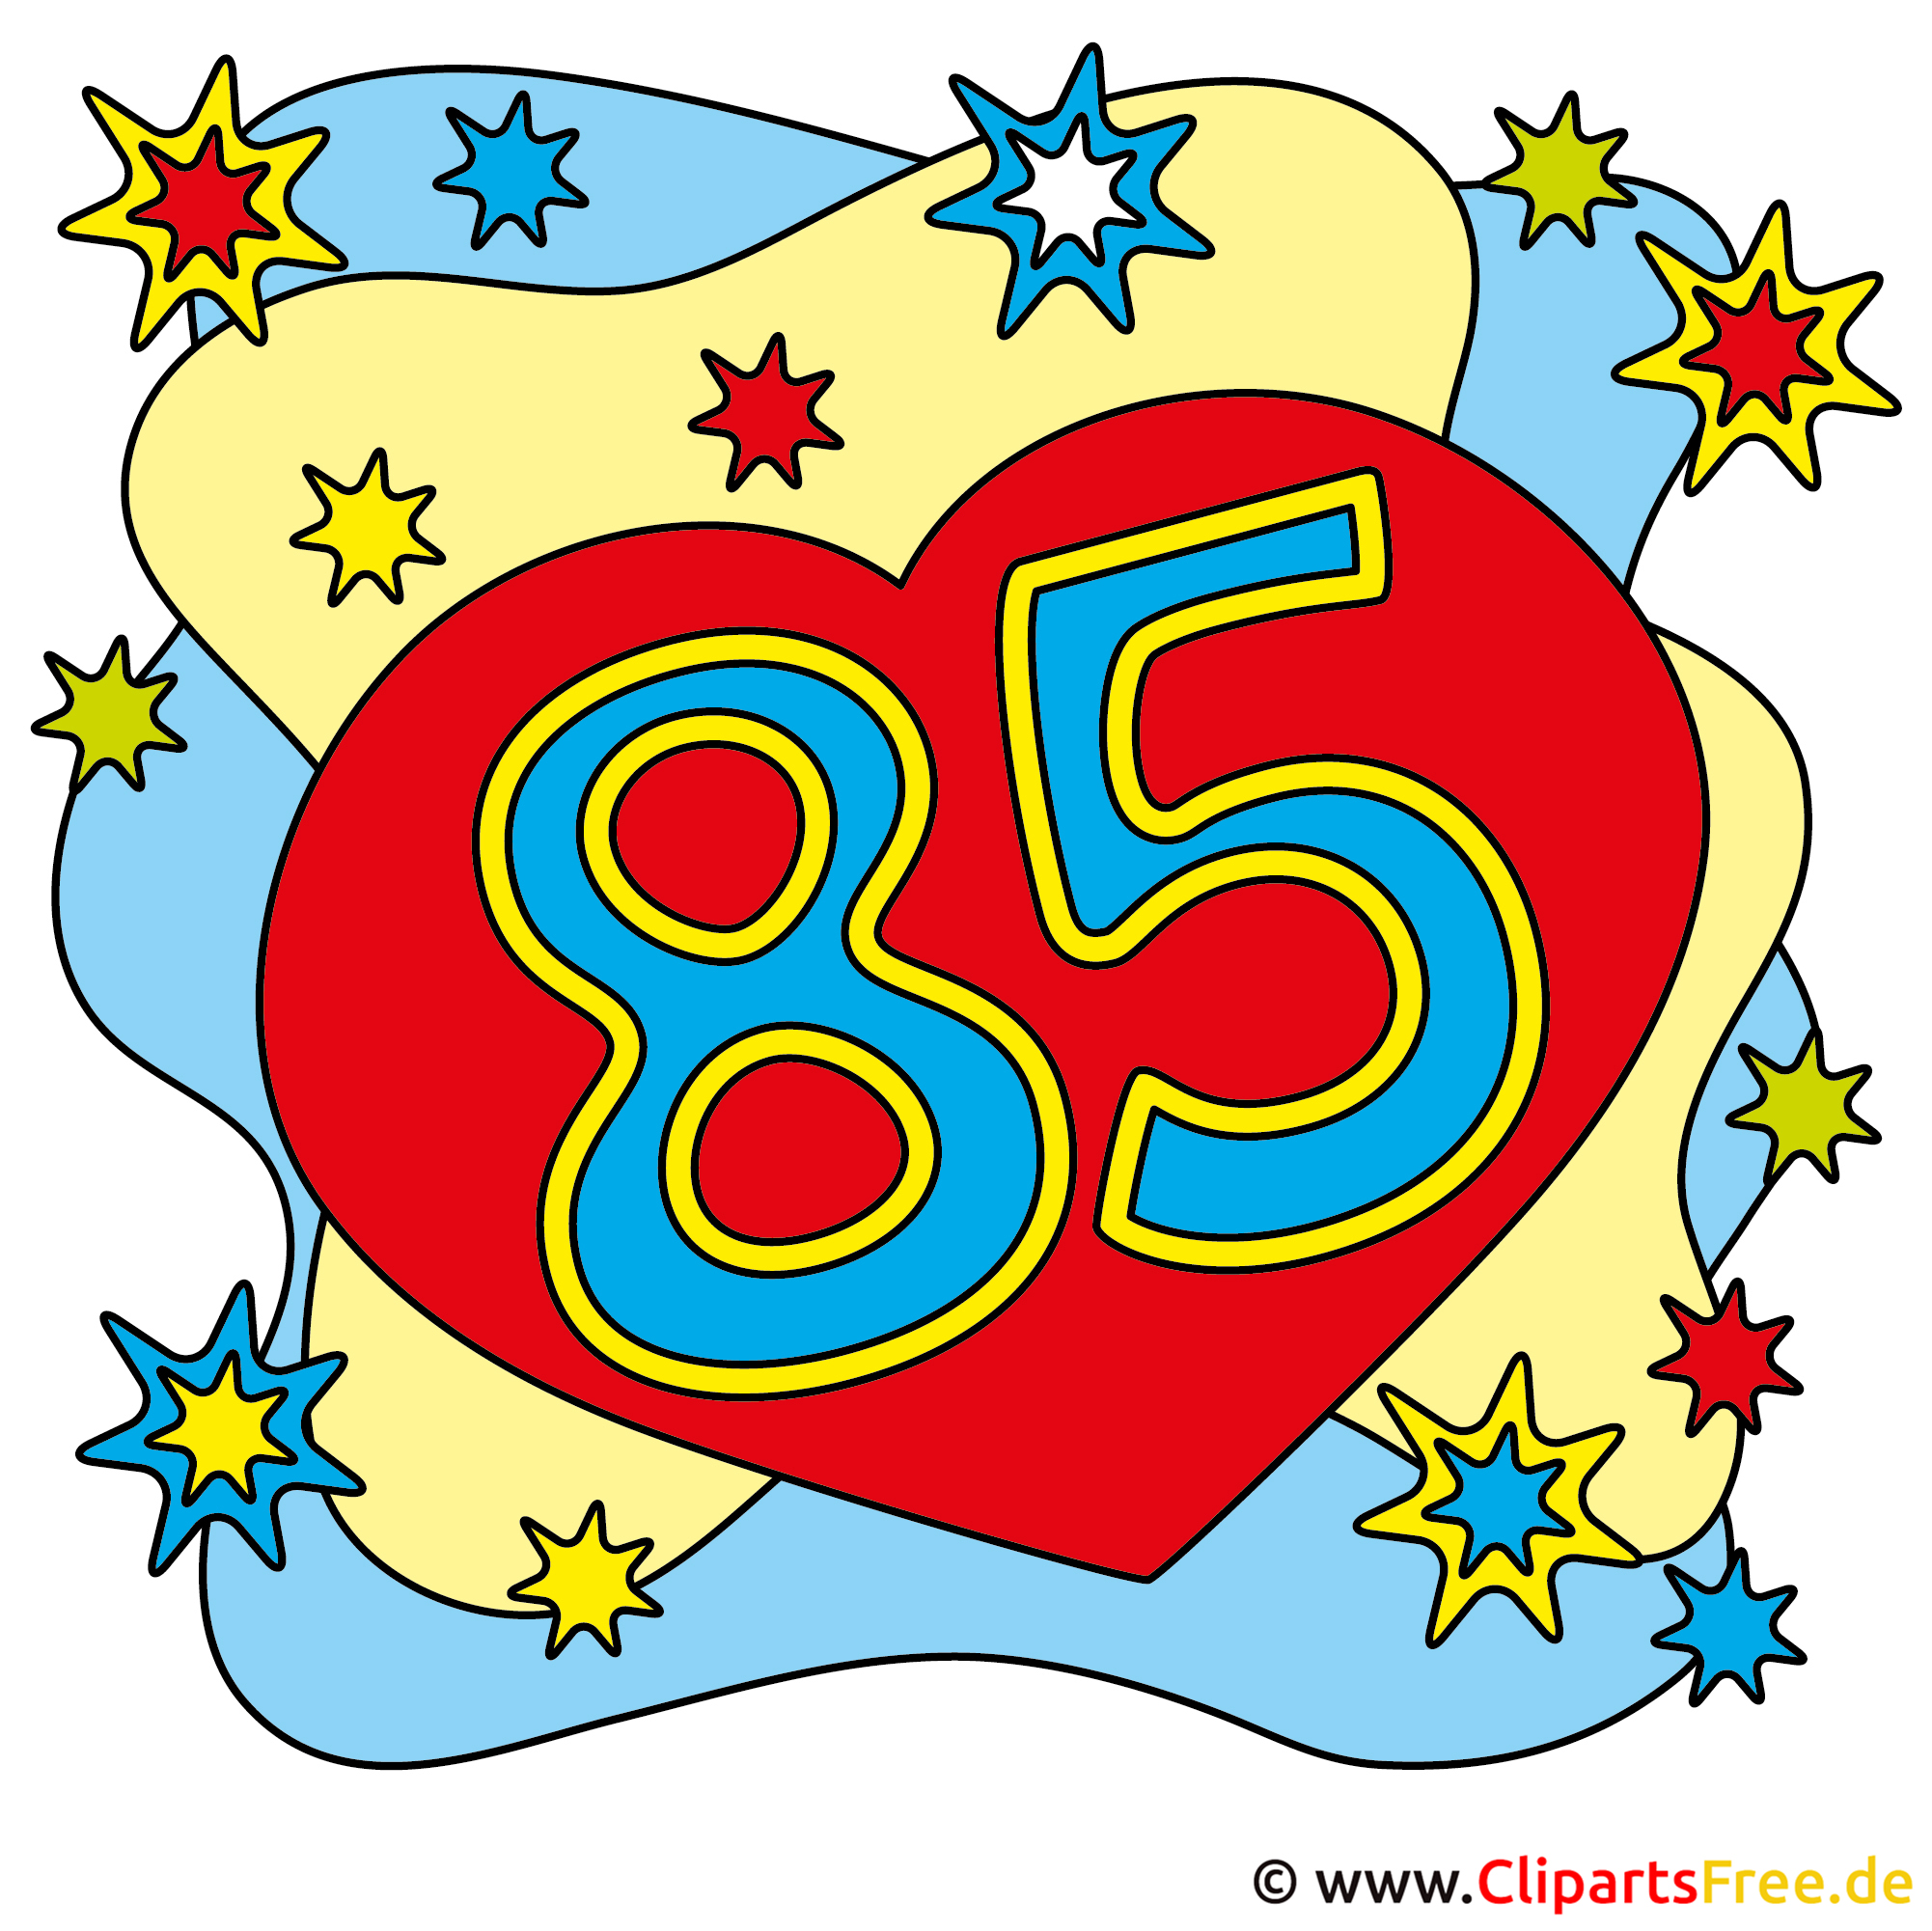  85 Geburtstagskarte Gratis